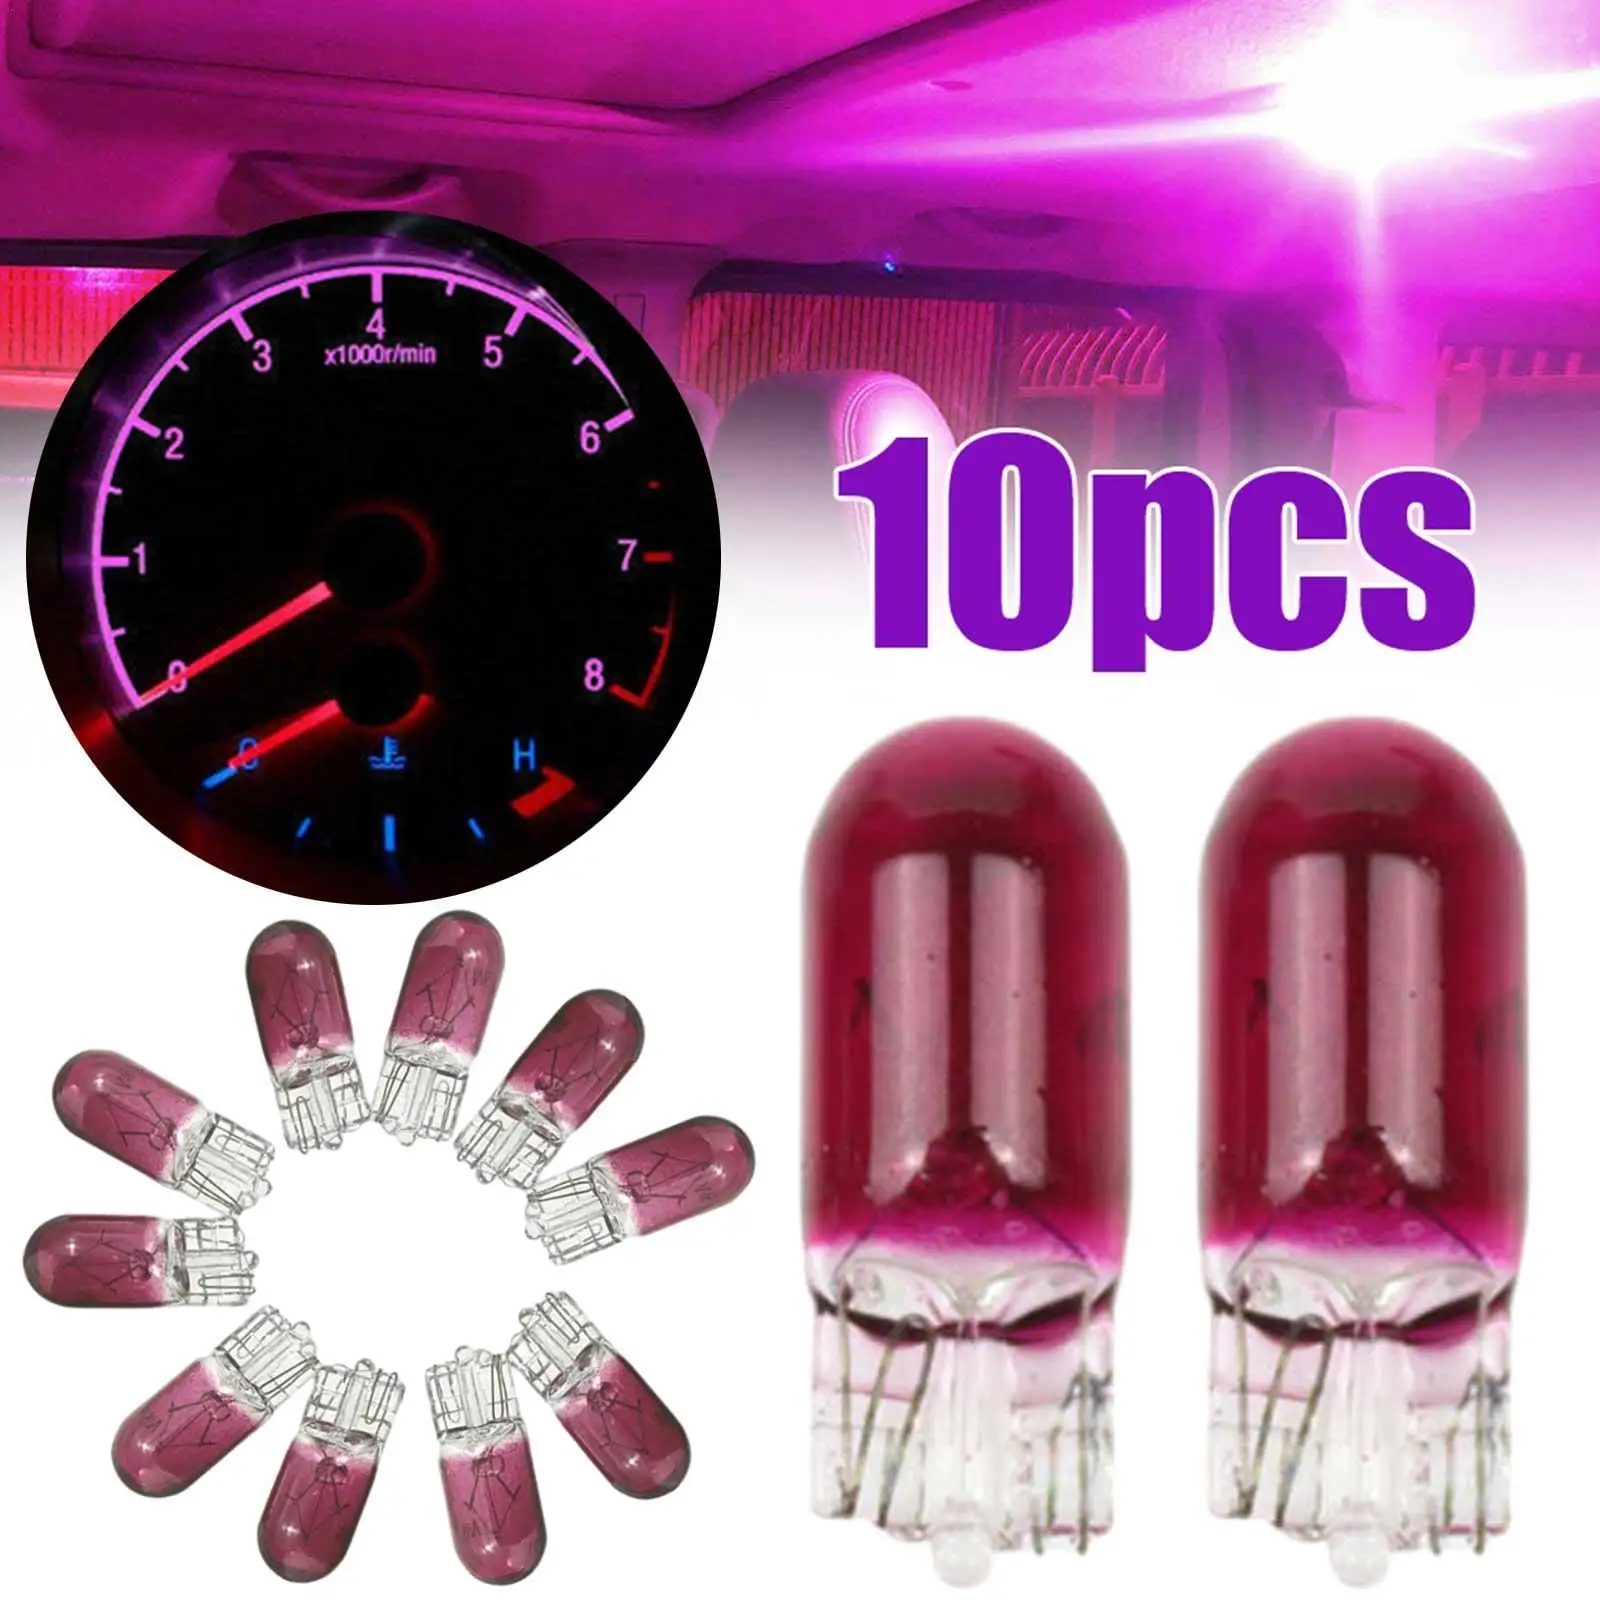 

10pcs Purple T10 501 W5W Wedge Interior Car 12V 3W Dashboard Dash Panel Gauge Bulb for Car Styling Light Bulbs Accessories